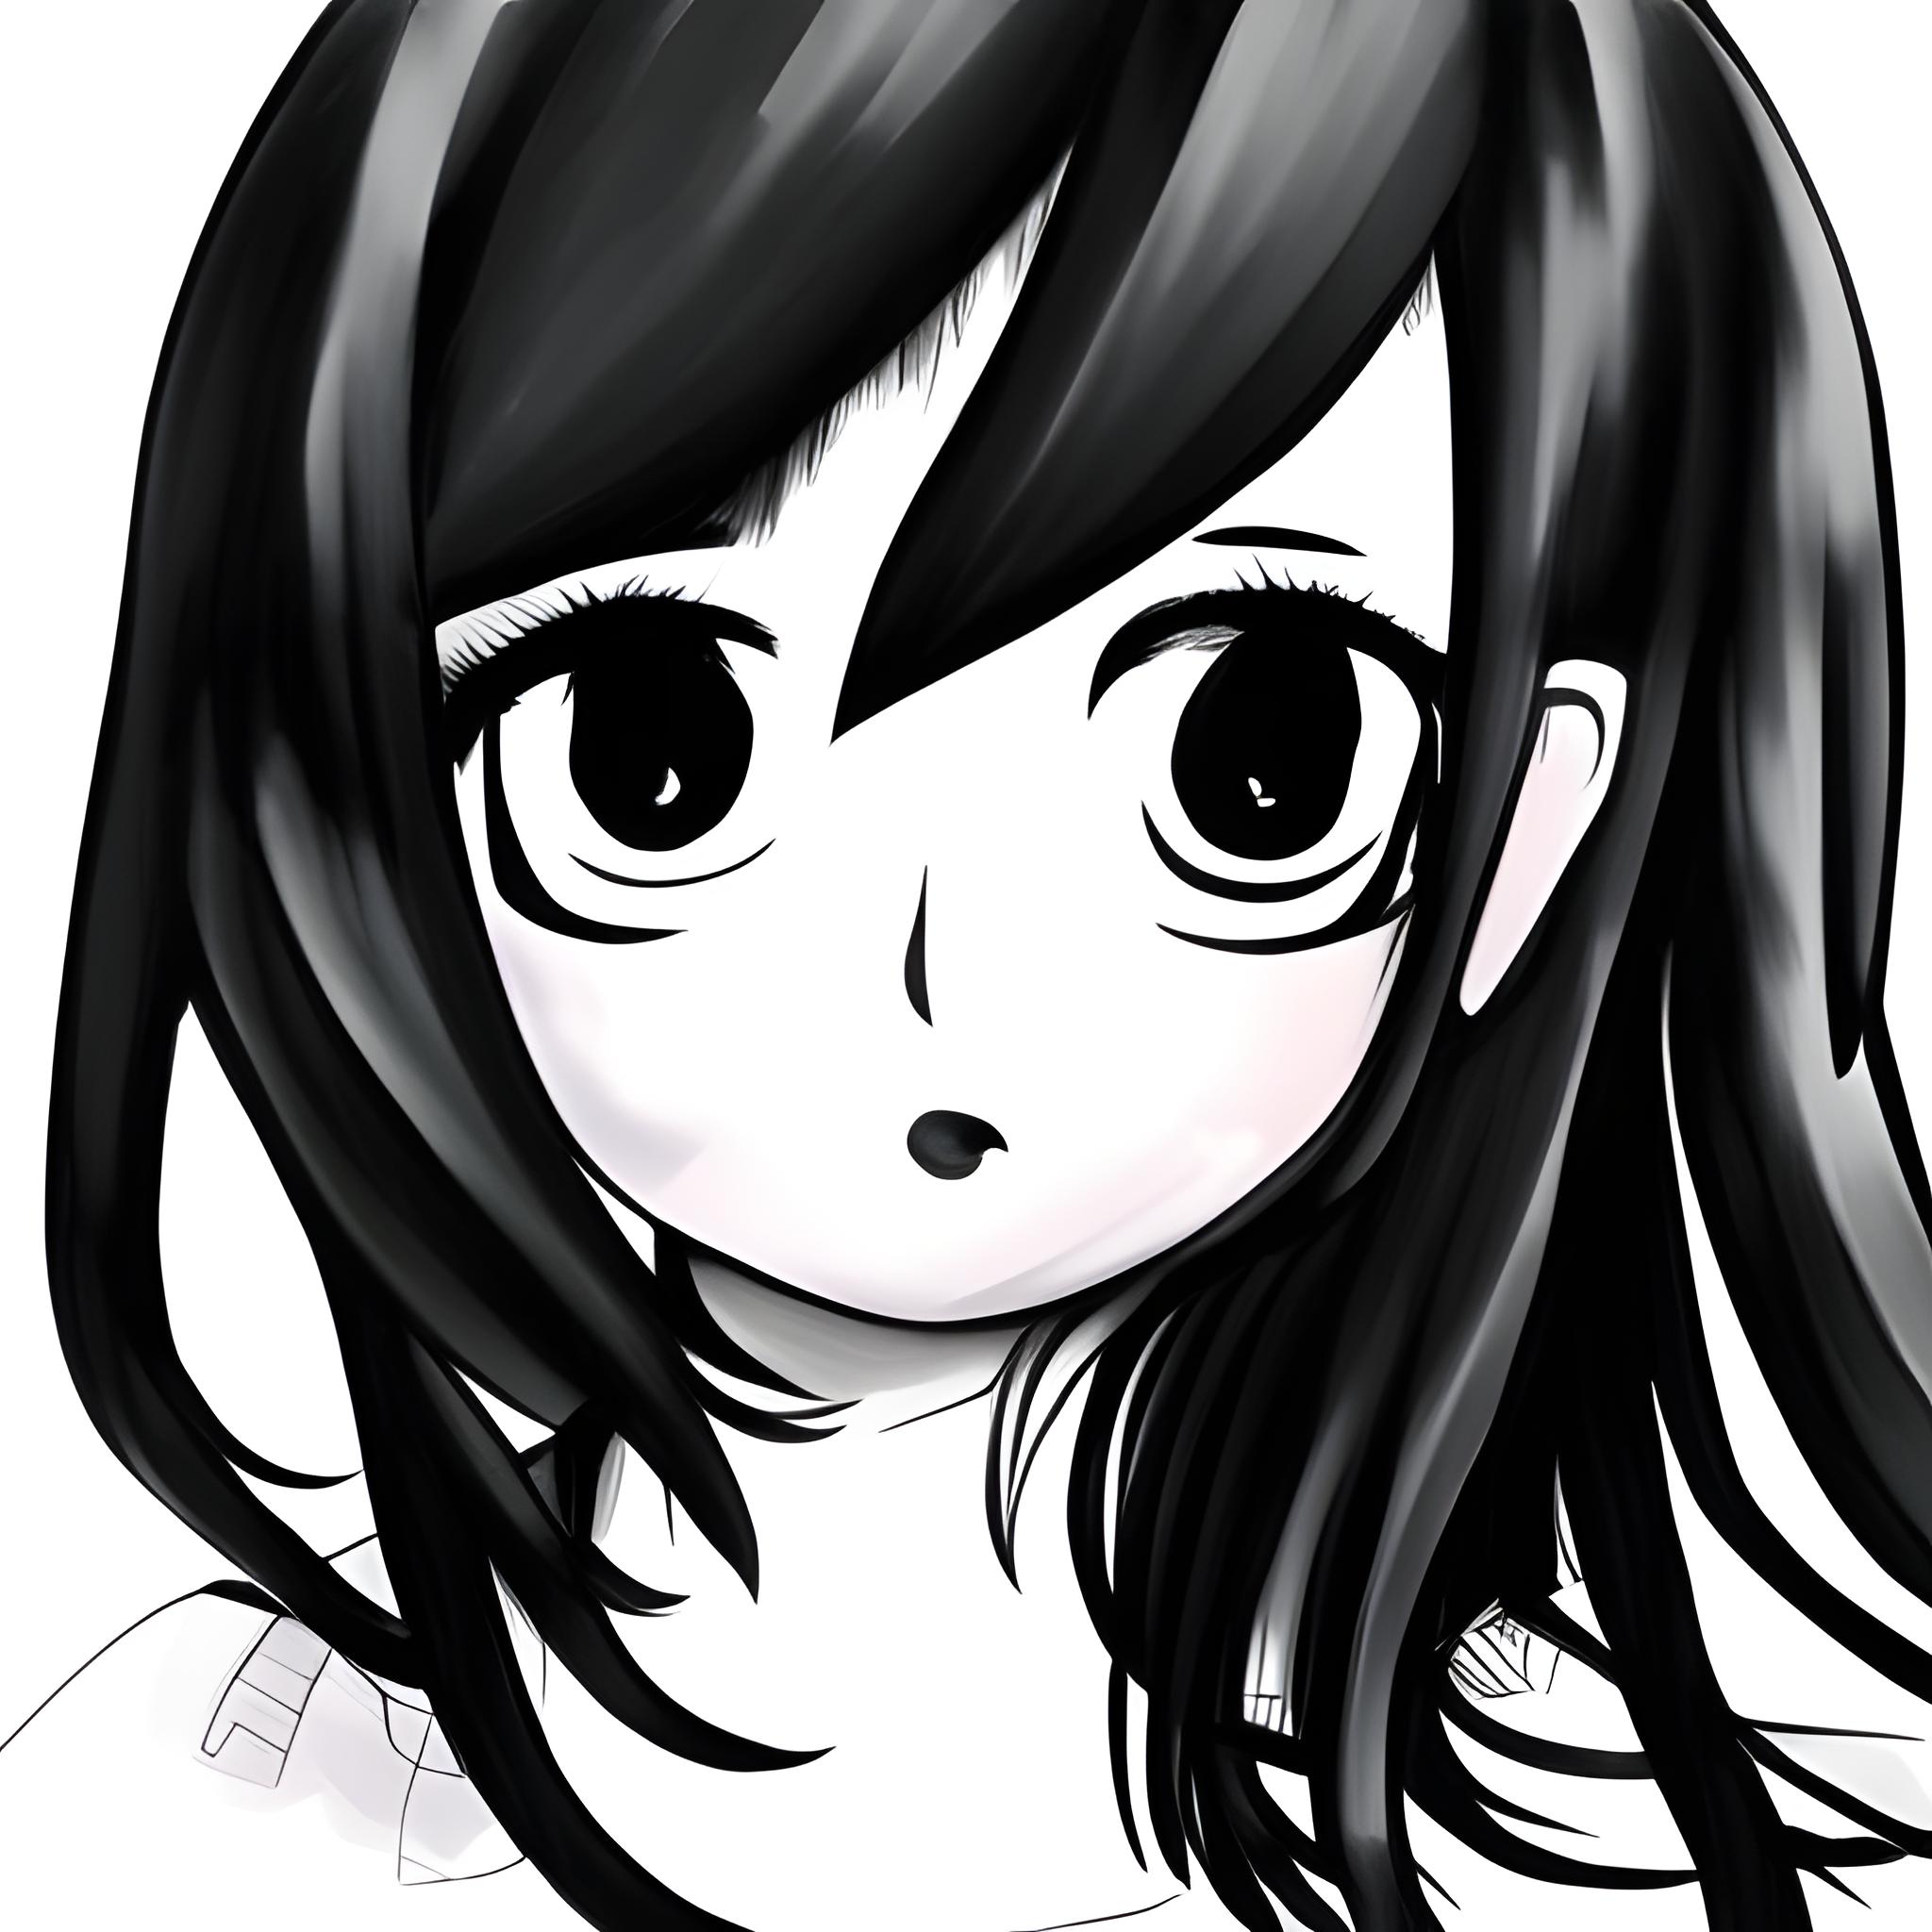 Art with Anwit on Twitter Drawing Kakashi Hatake in different anime  styles Kakashi anime artwork httpstcoFQYYaJcn22  Twitter